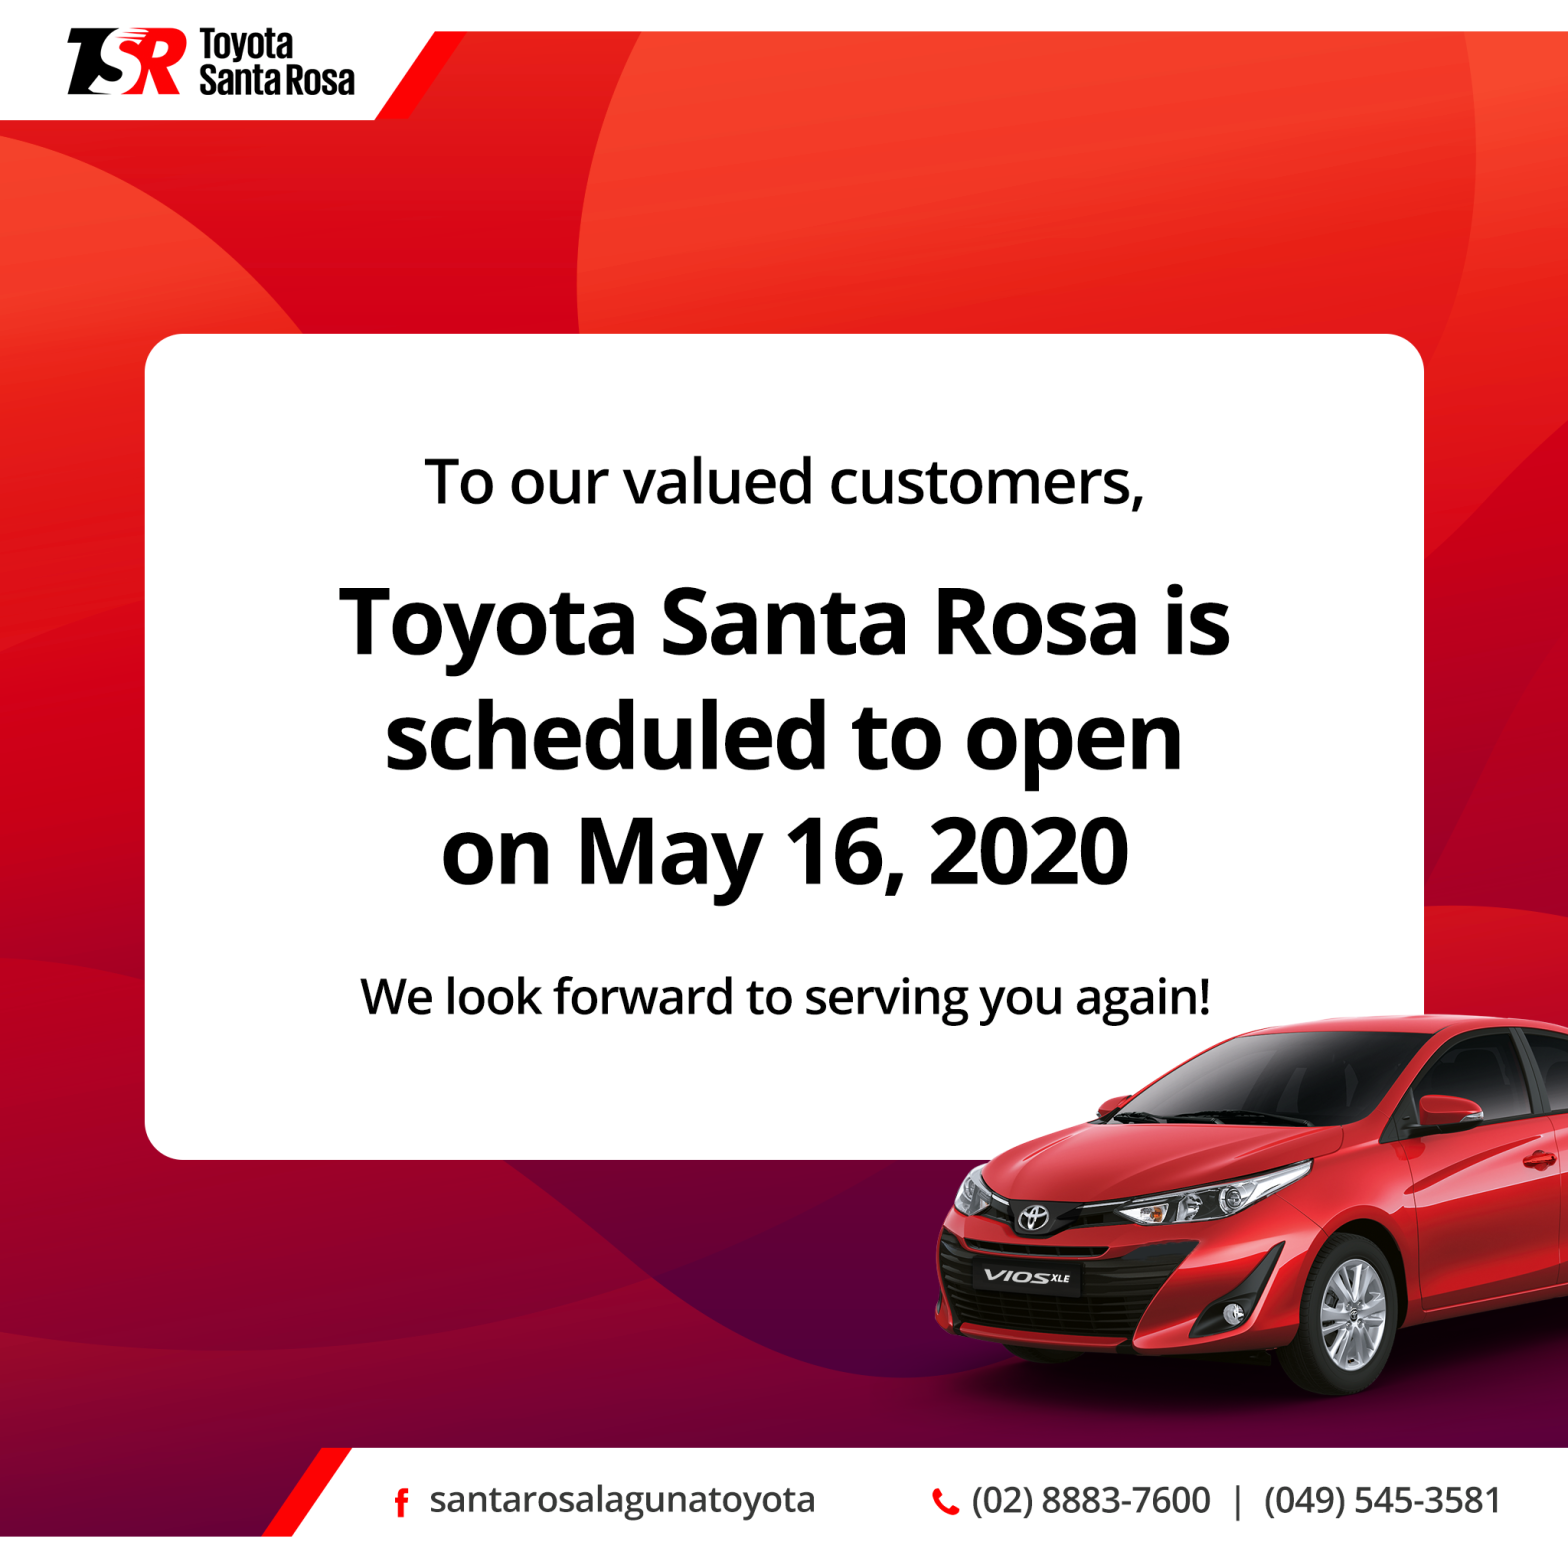 Toyota Santa Rosa Laguna to Re-open on May 16, 2020